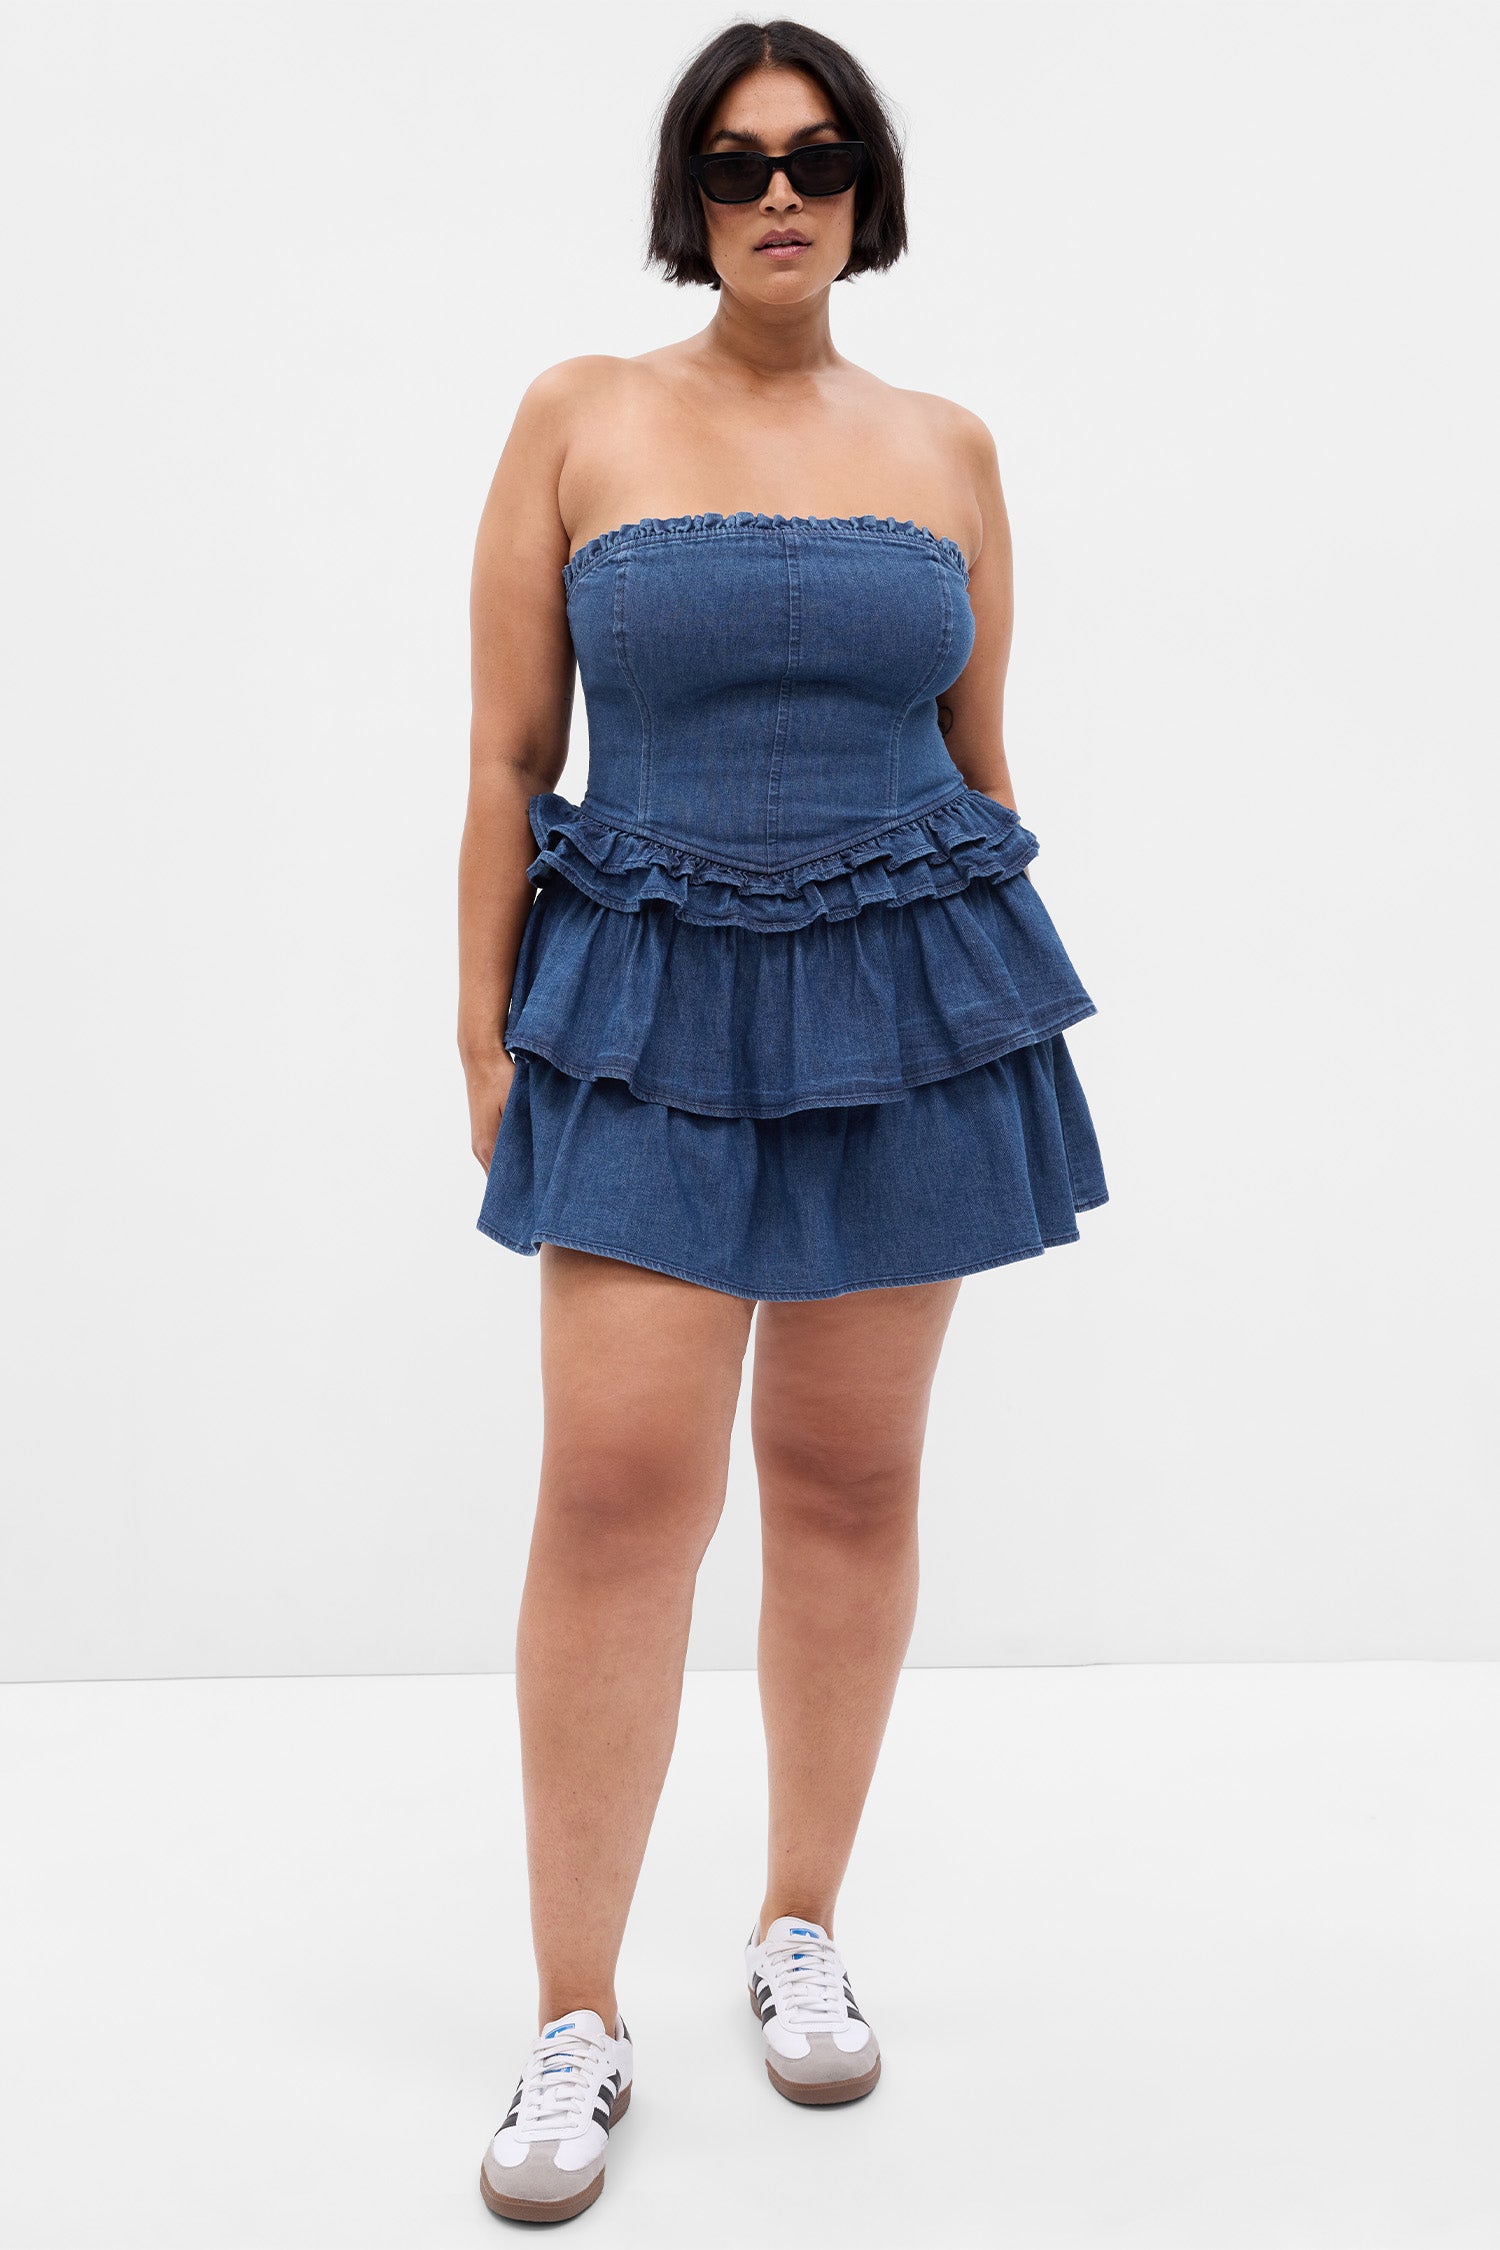 Model wearing blue denim mini dress with corset top and ruffle skirt